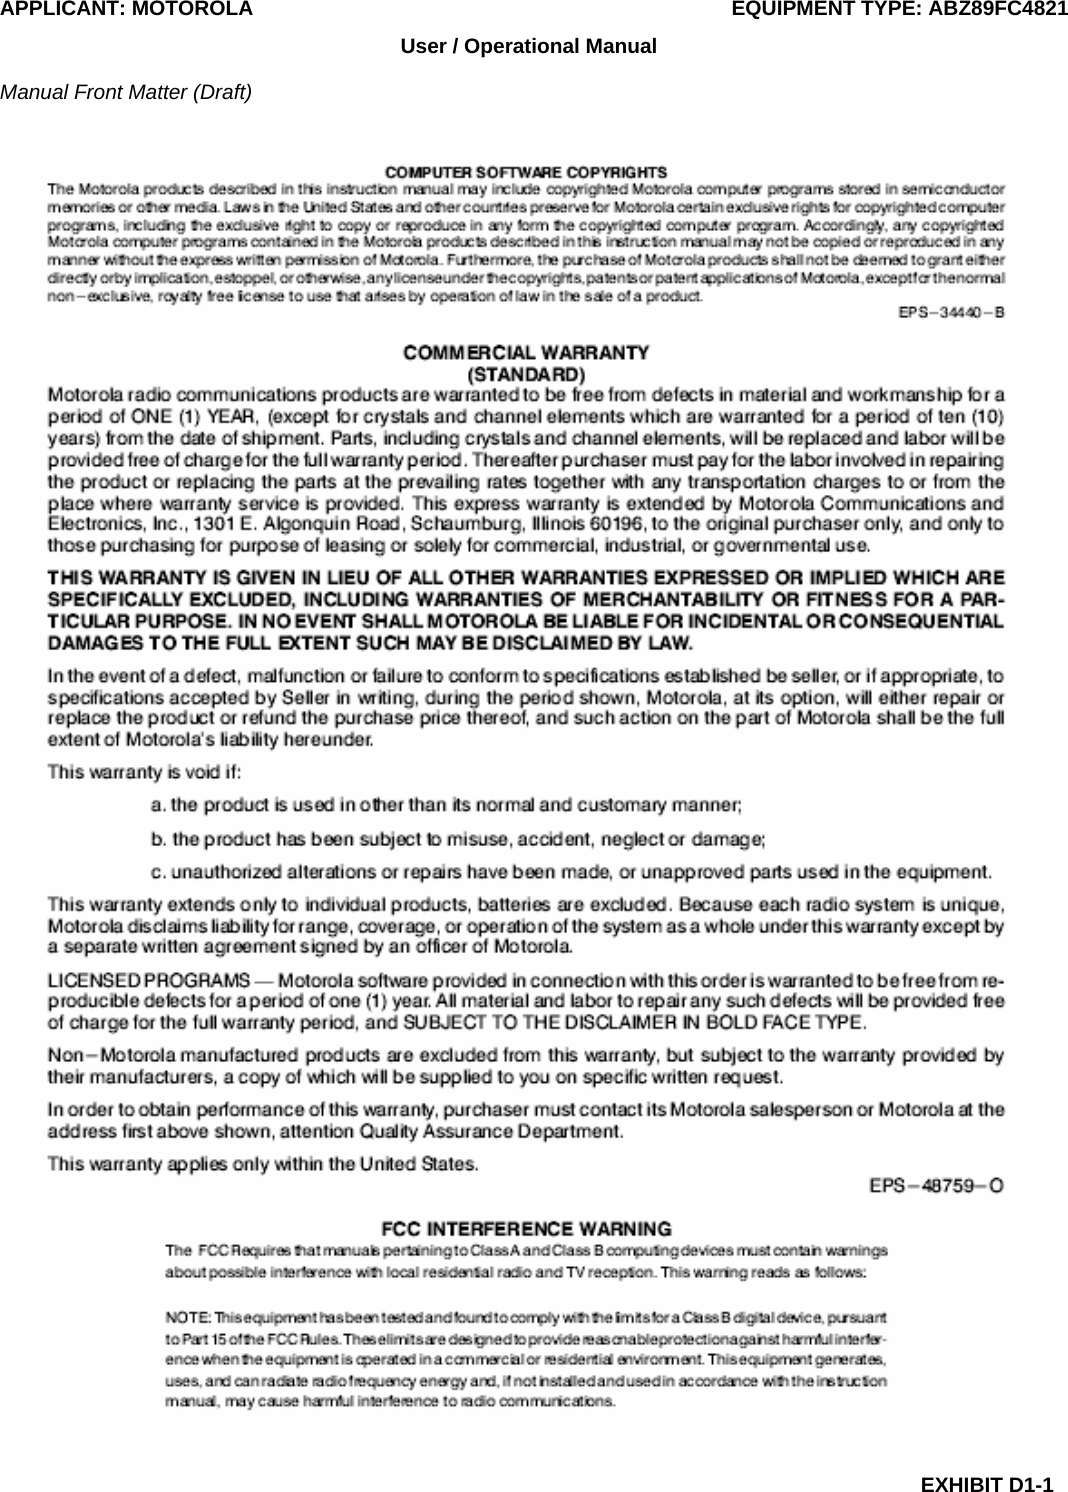 APPLICANT: MOTOROLA  EQUIPMENT TYPE: ABZ89FC4821 EXHIBIT D1-1 User / Operational Manual  Manual Front Matter (Draft) 